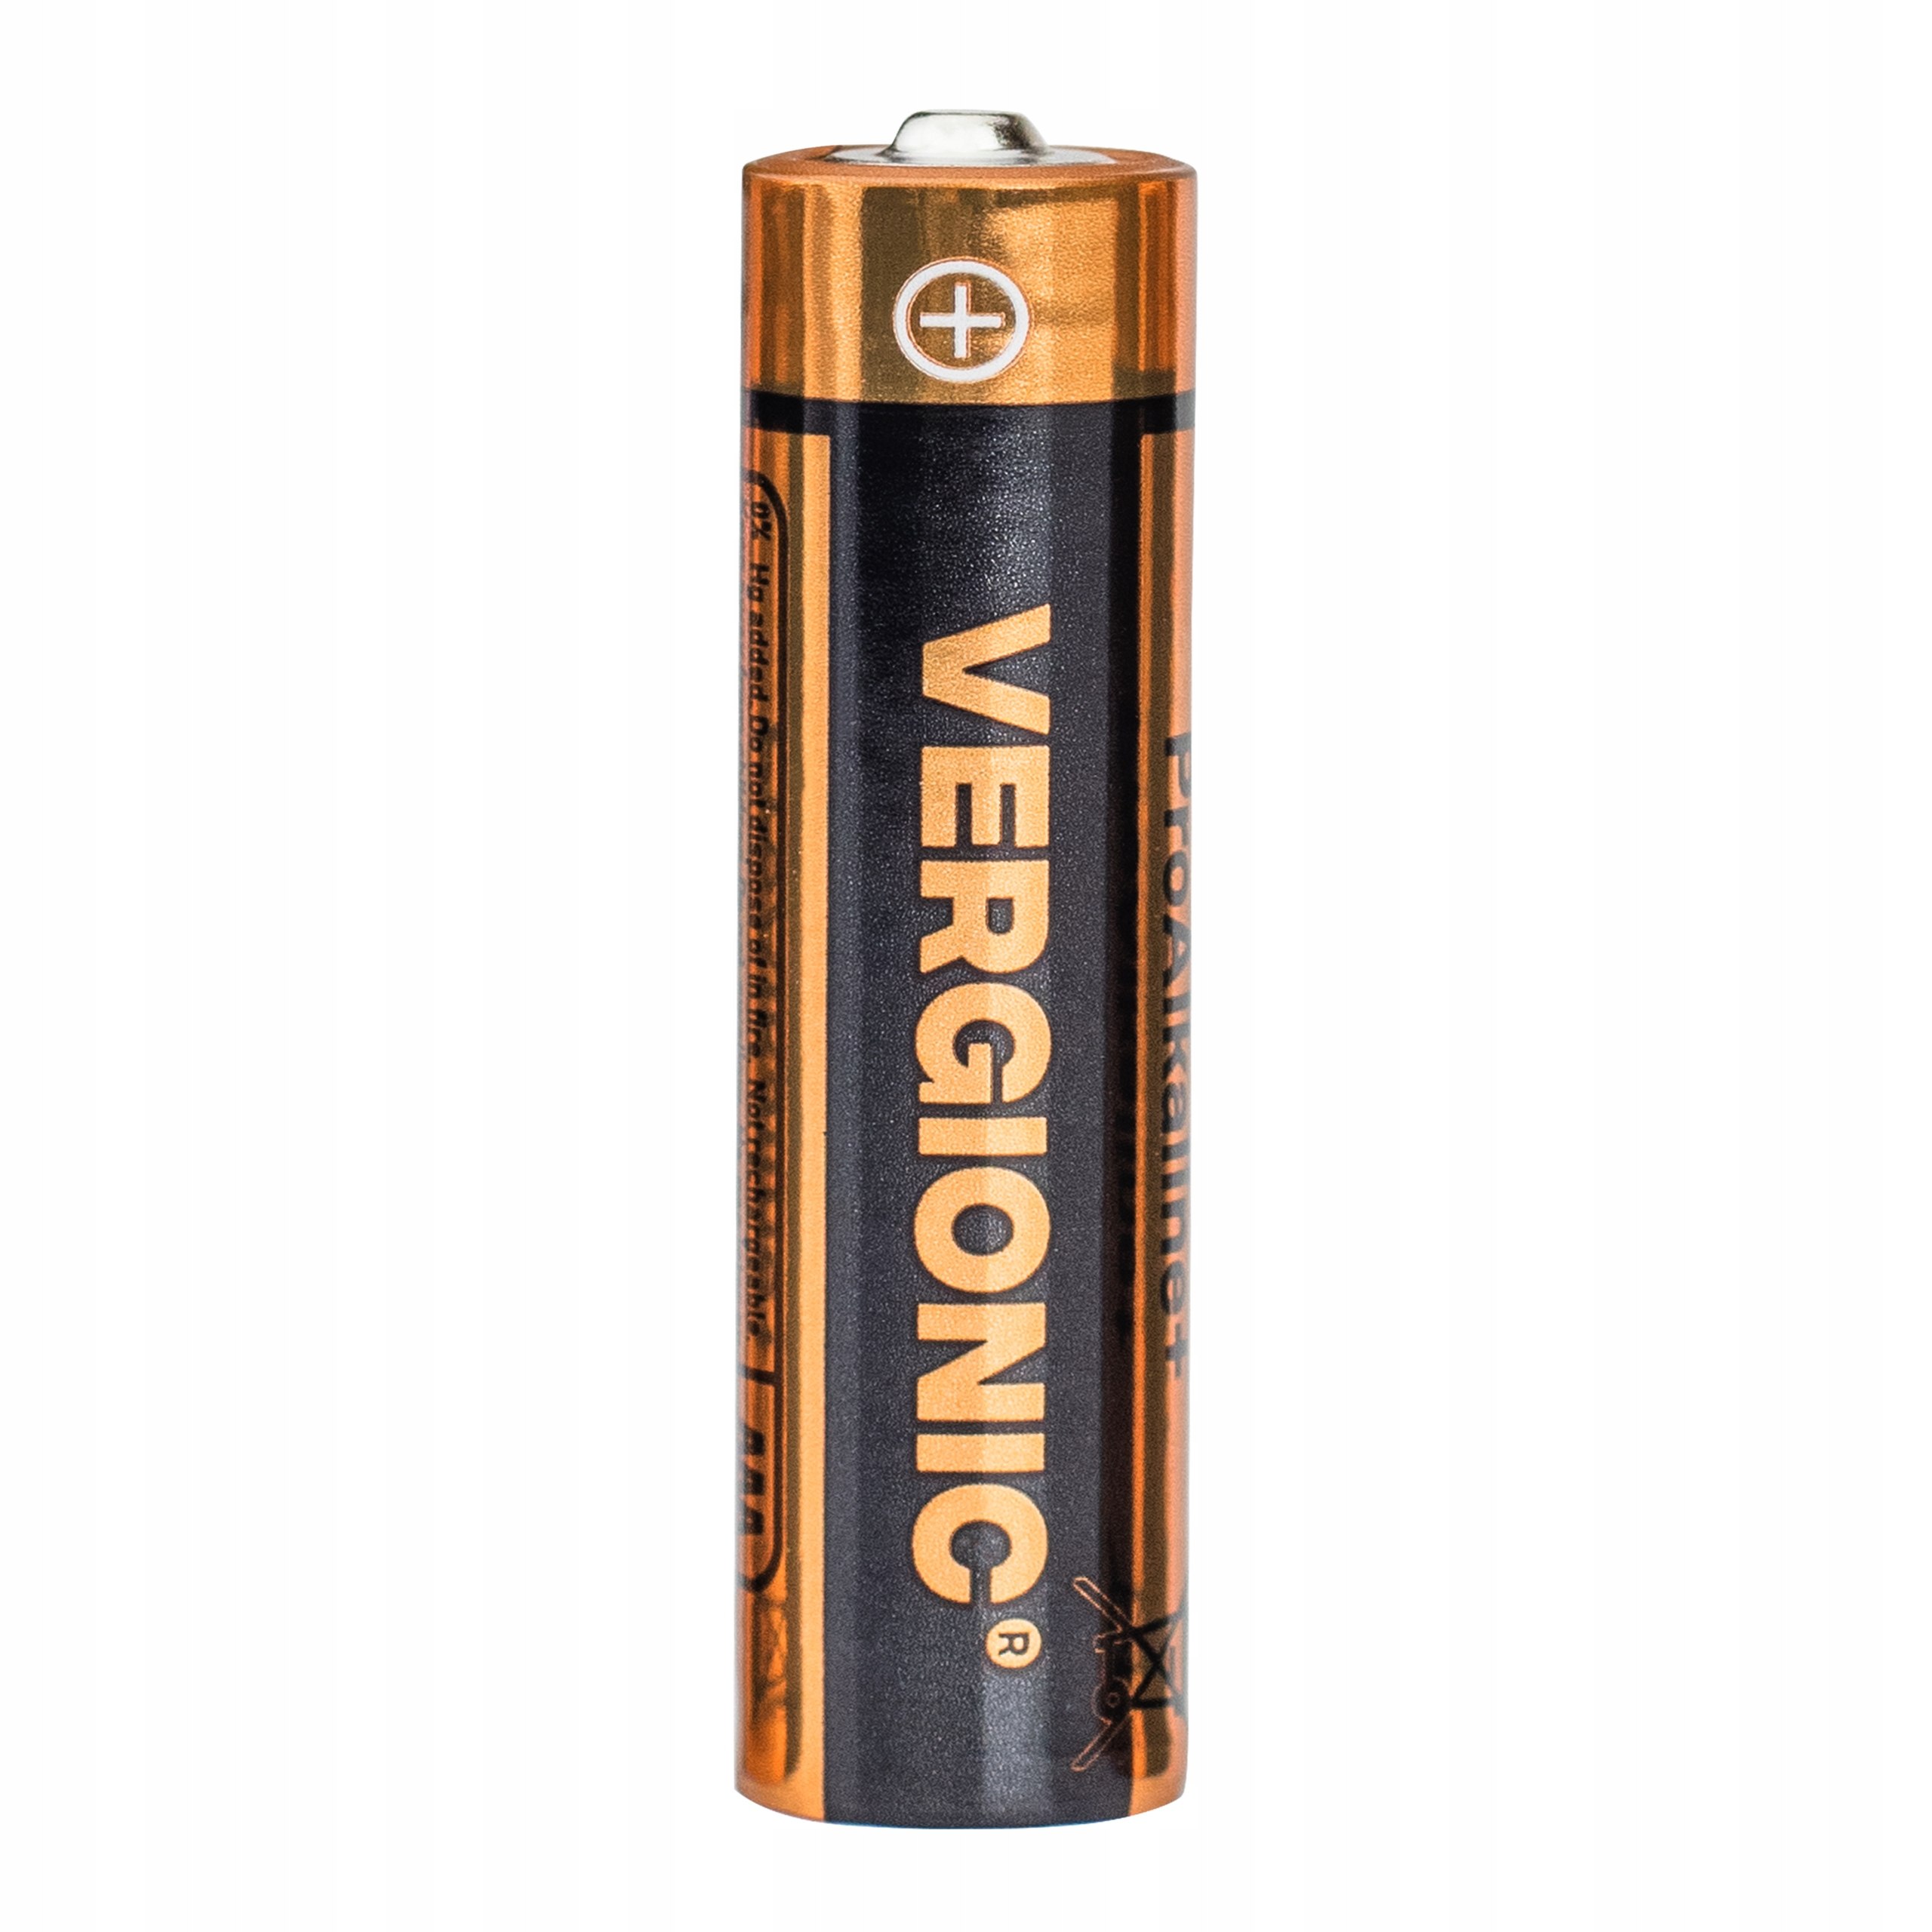 Baterie alkaliczne 6 szt. AA R6 VERGIONIC Symbol baterii AA (R6)